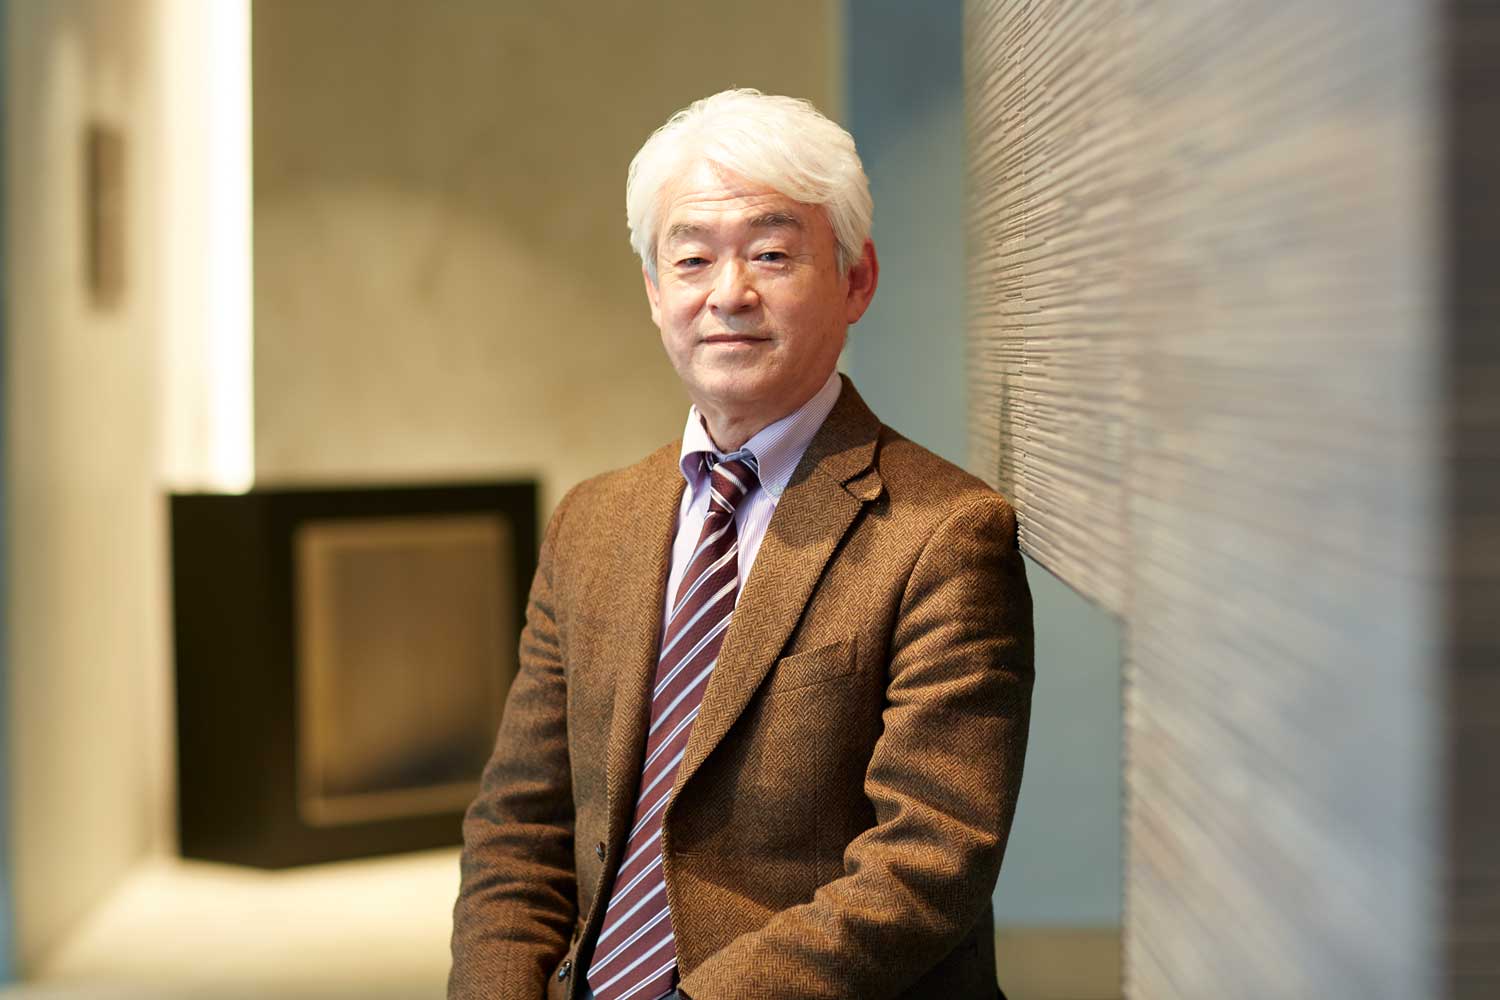 Mr. Nobuhiro Kosugi, the chief designer for Grand Seiko